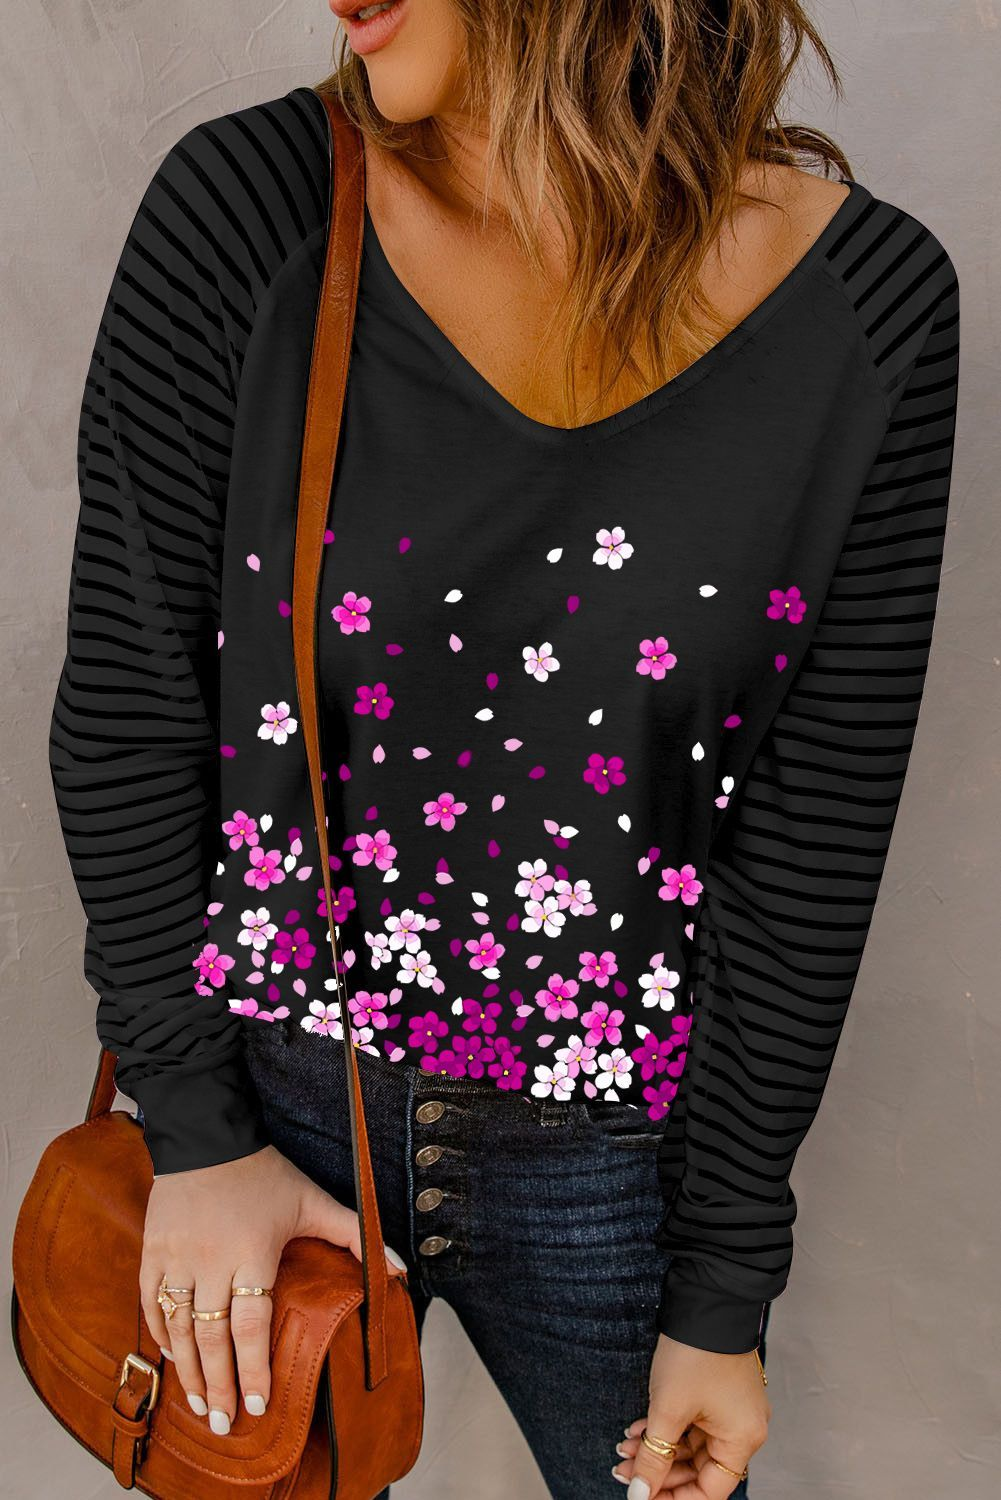 Cherry Blossom Shirt, T-Shirt, Jean, Shoe, & More Sakura Apparels - Evaless